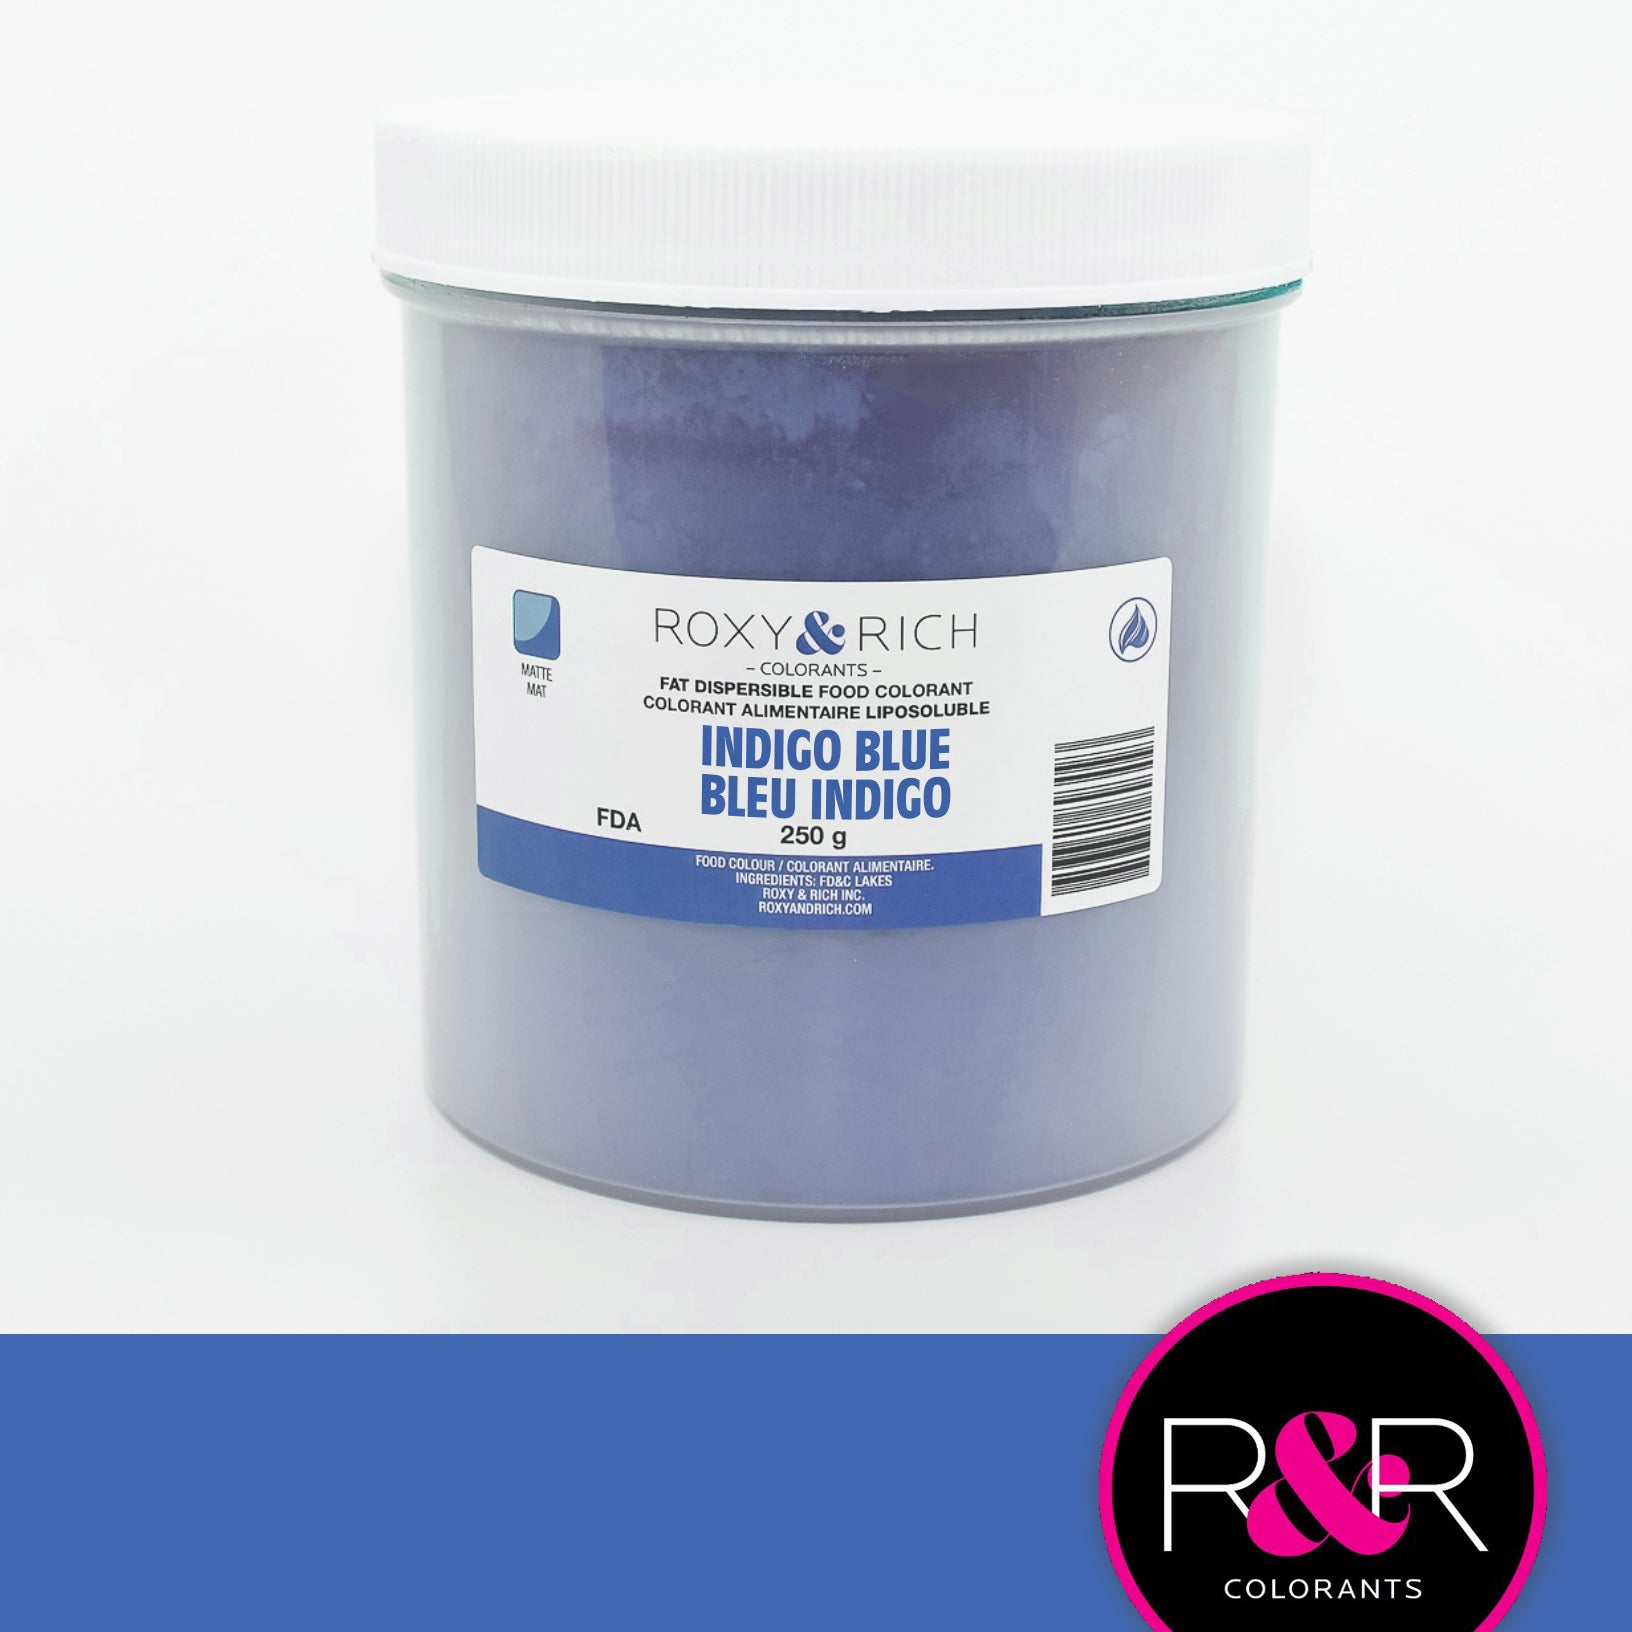 Colorant alimentaire liposoluble bleu Sky Blue 20 ml - Colour Mill